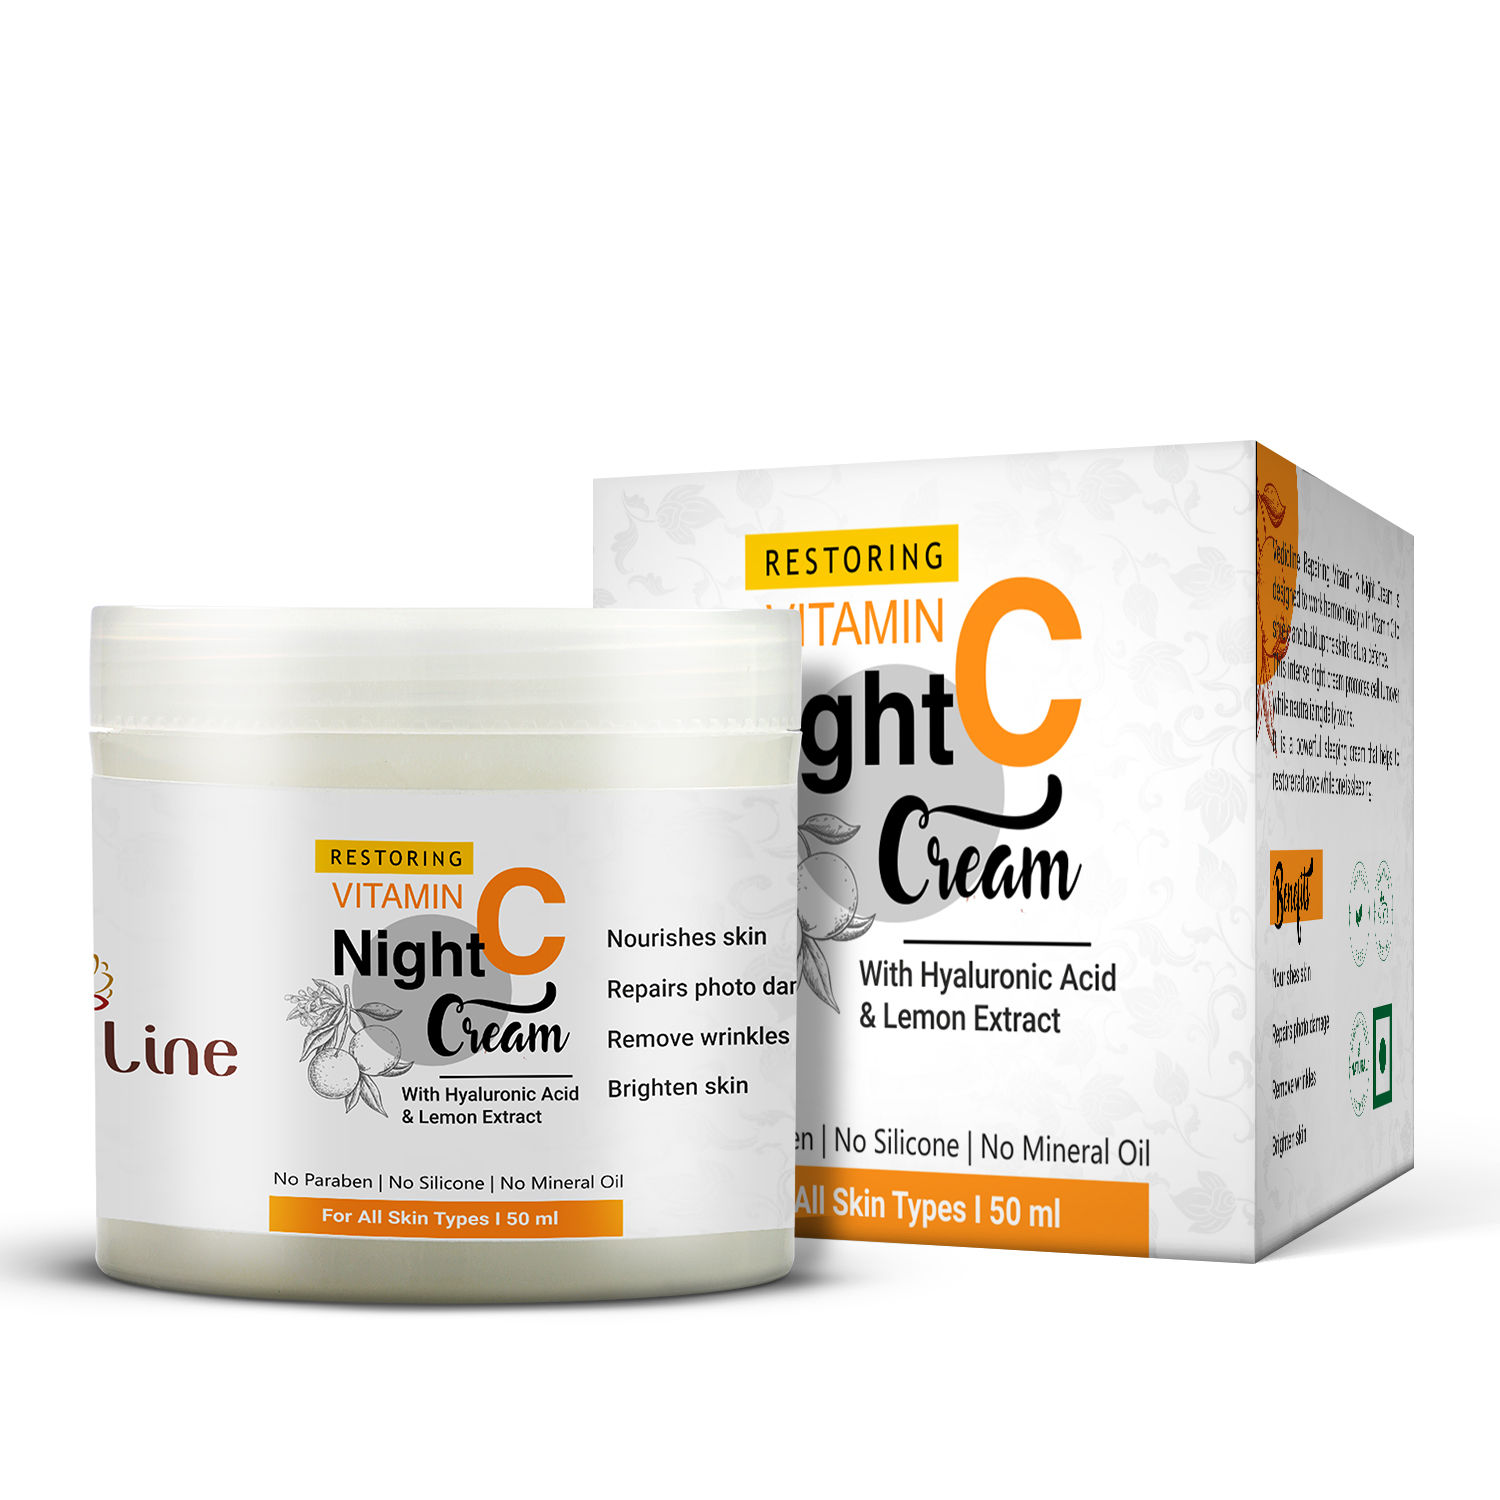 Buy Vedicline Vitamin C Night Cream, Minimize Dark Spots & Dark Circles, Pigmentation With Citrus Lemon Extract, Aloe Vera, Sweet Almond Oil For Rejuvenating Skin, 50ml - Purplle